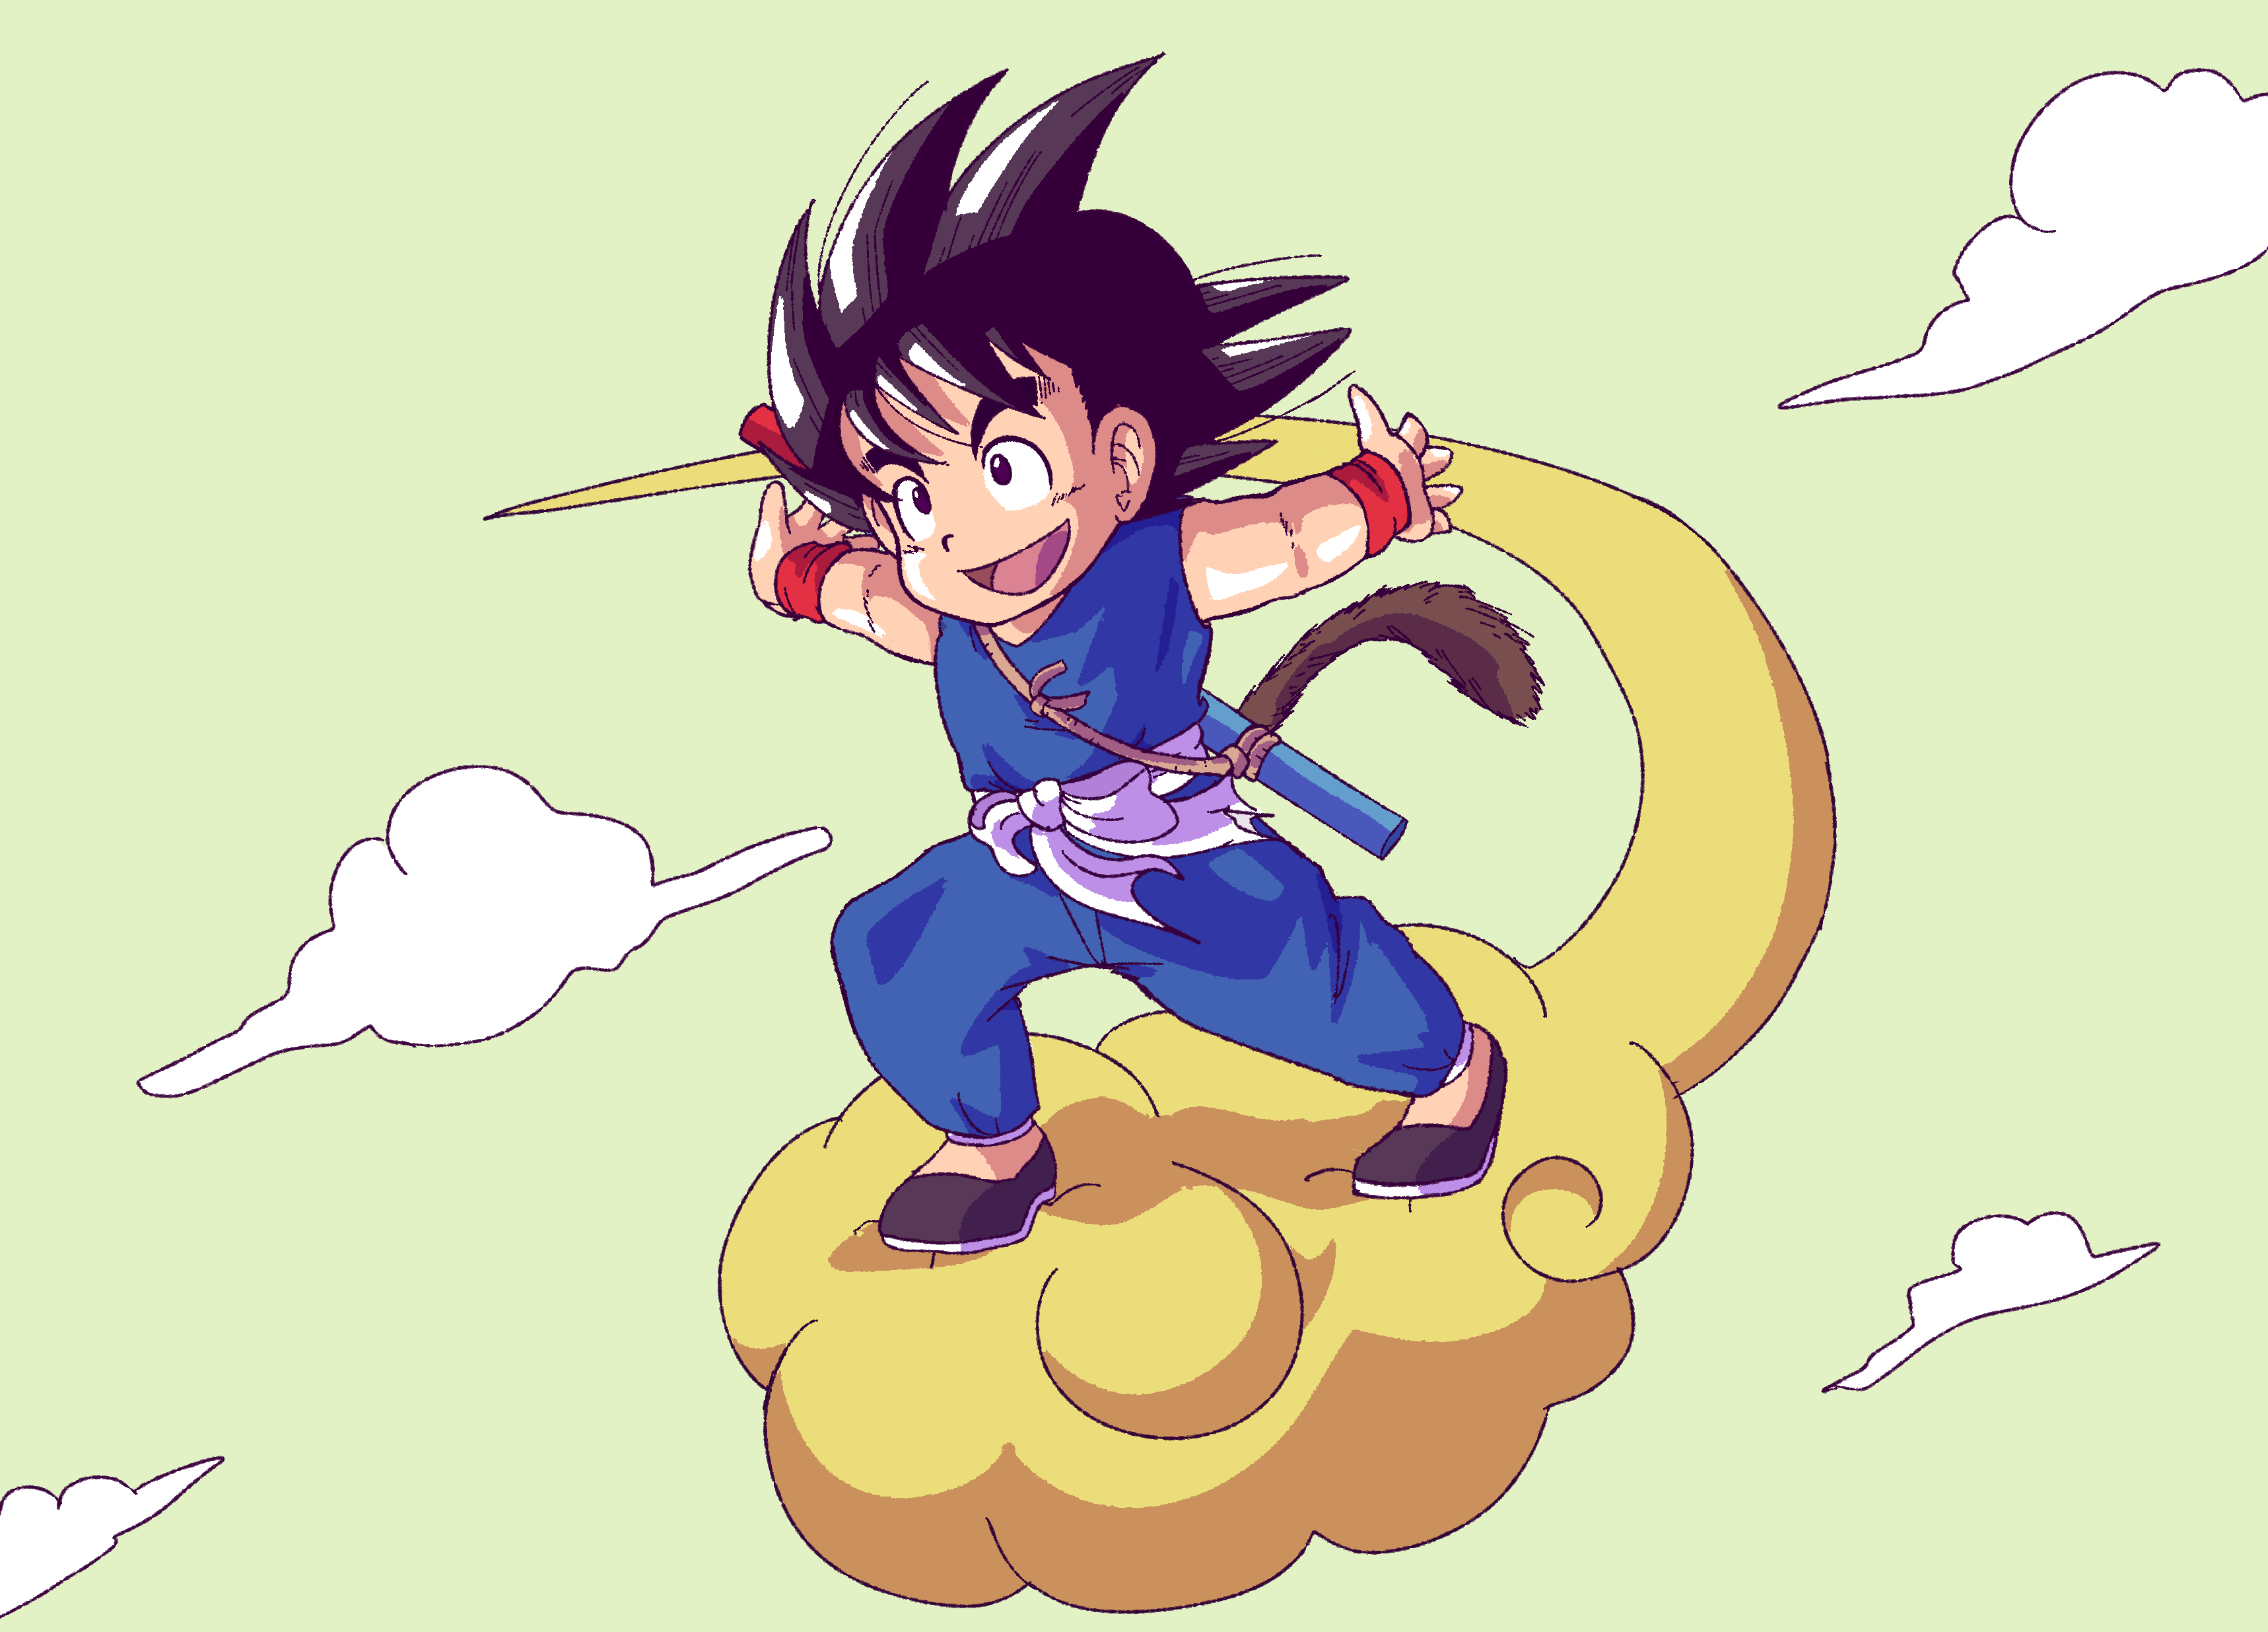 Son Goku by Dragonmarrs on DeviantArt